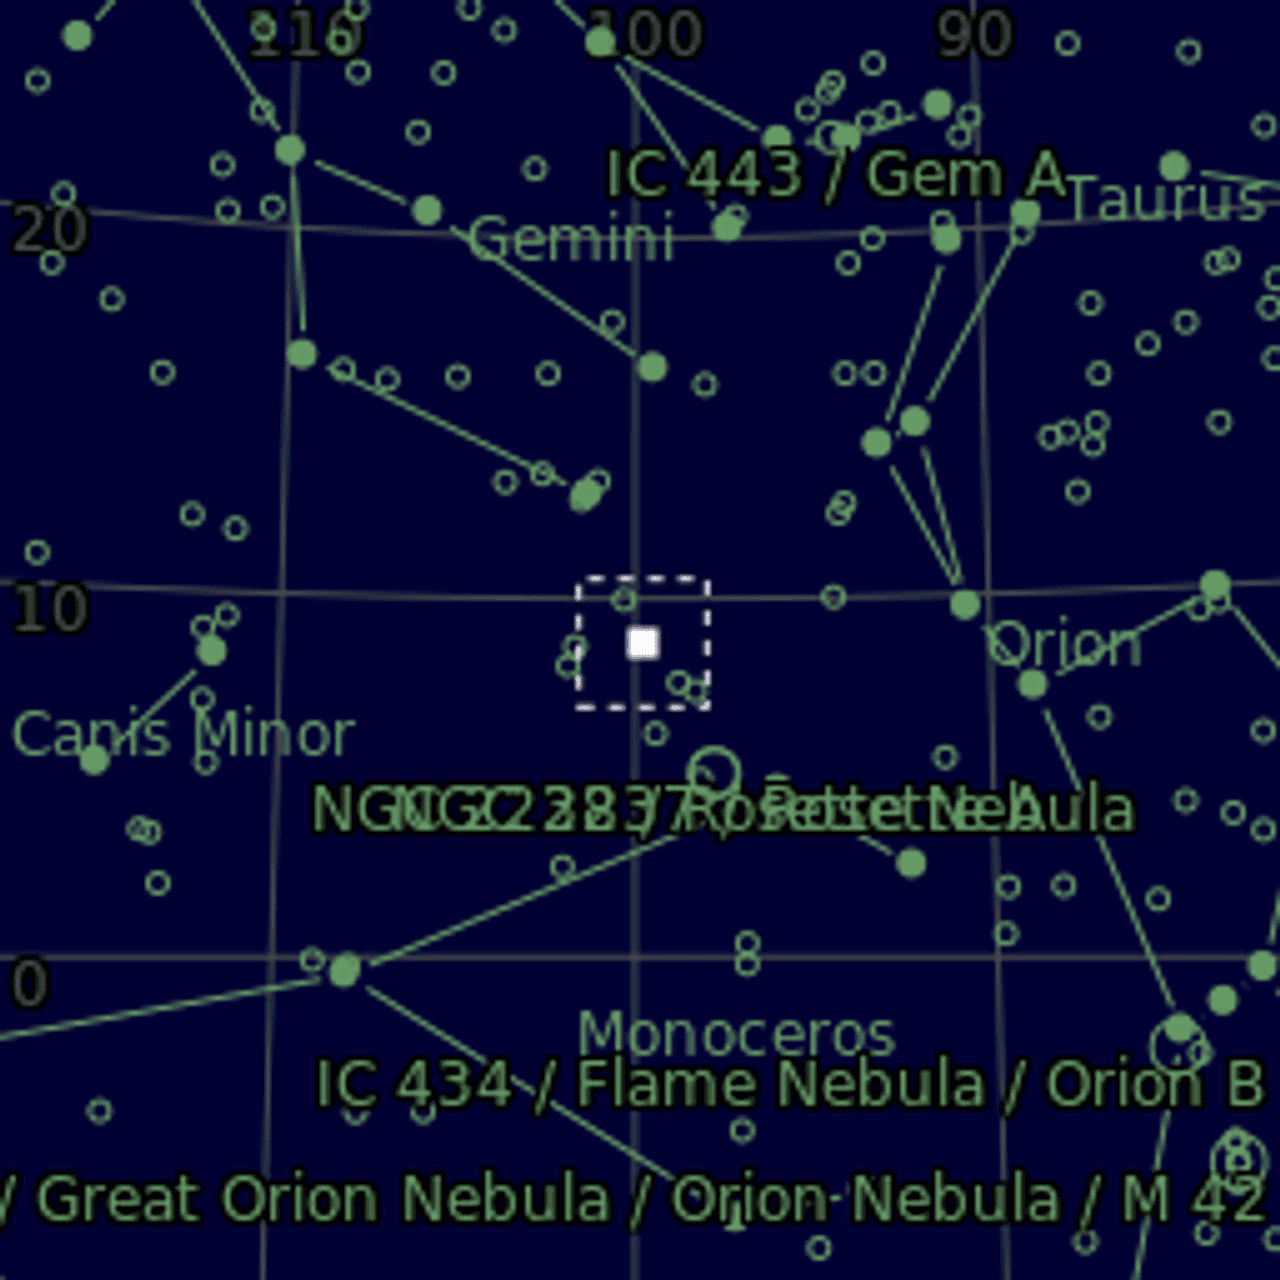 Star map of NGC2261